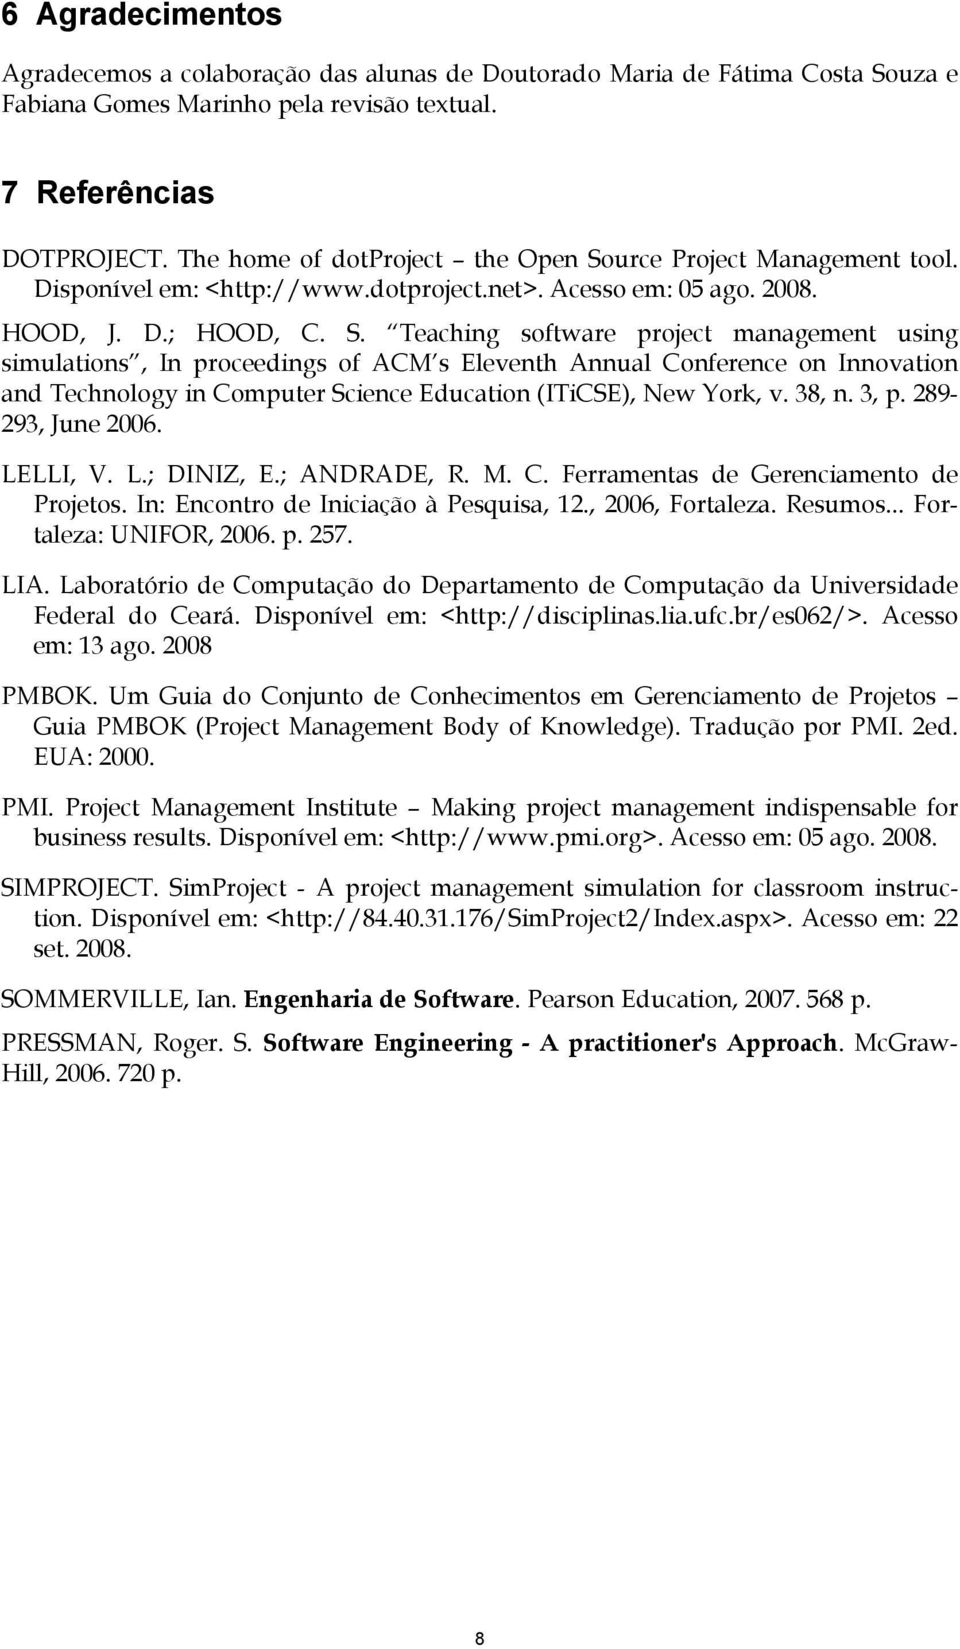 urce Project Management tool. Disponível em: <http://www.dotproject.net>. Acesso em: 05 ago. 2008. HOOD, J. D.; HOOD, C. S.